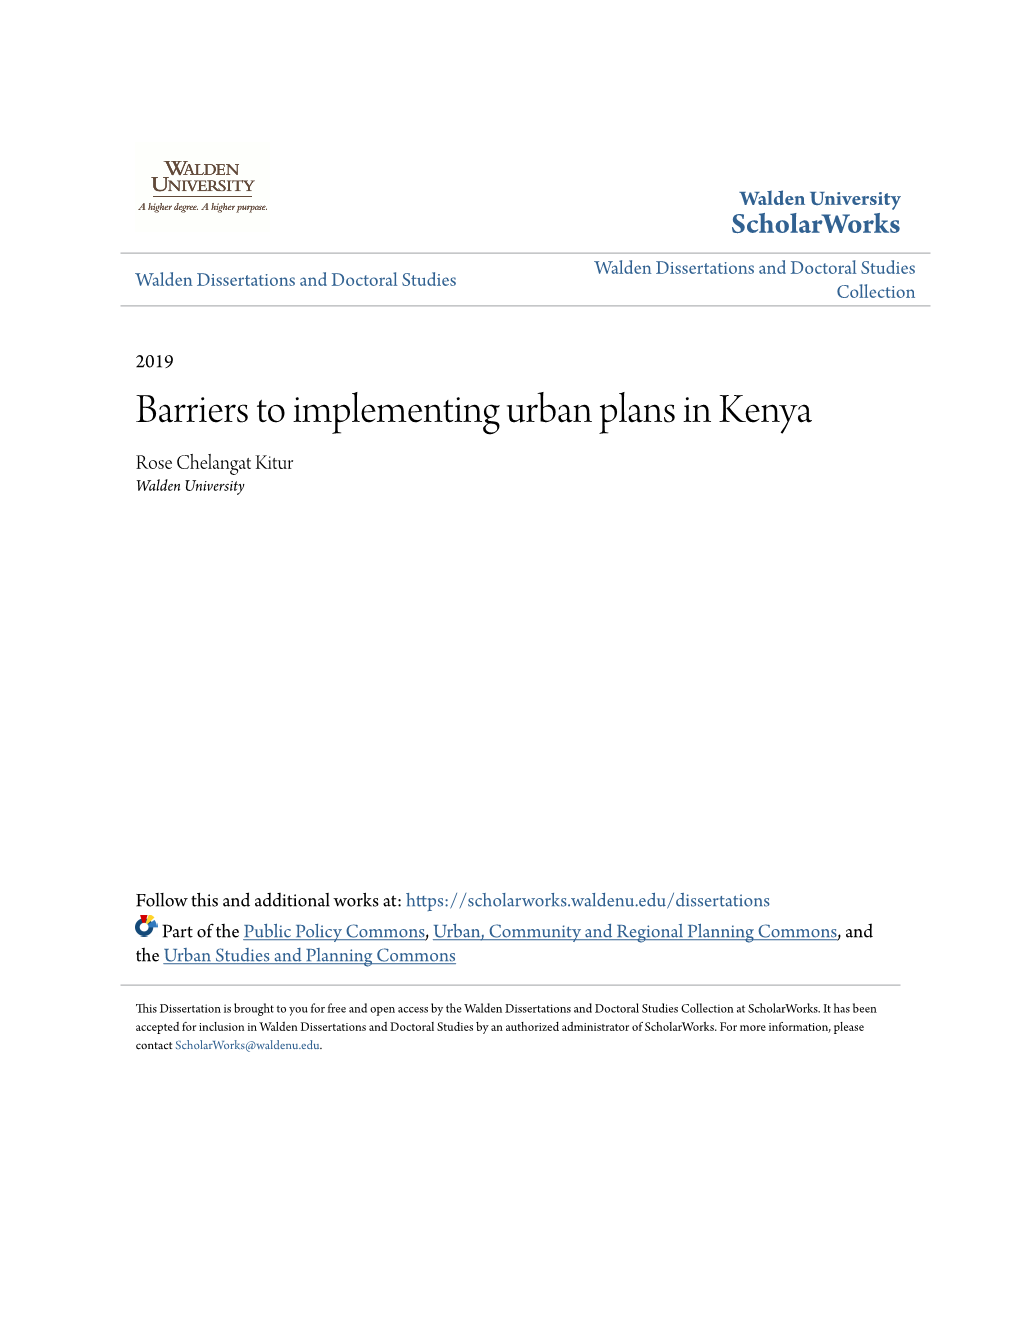 Barriers to Implementing Urban Plans in Kenya Rose Chelangat Kitur Walden University